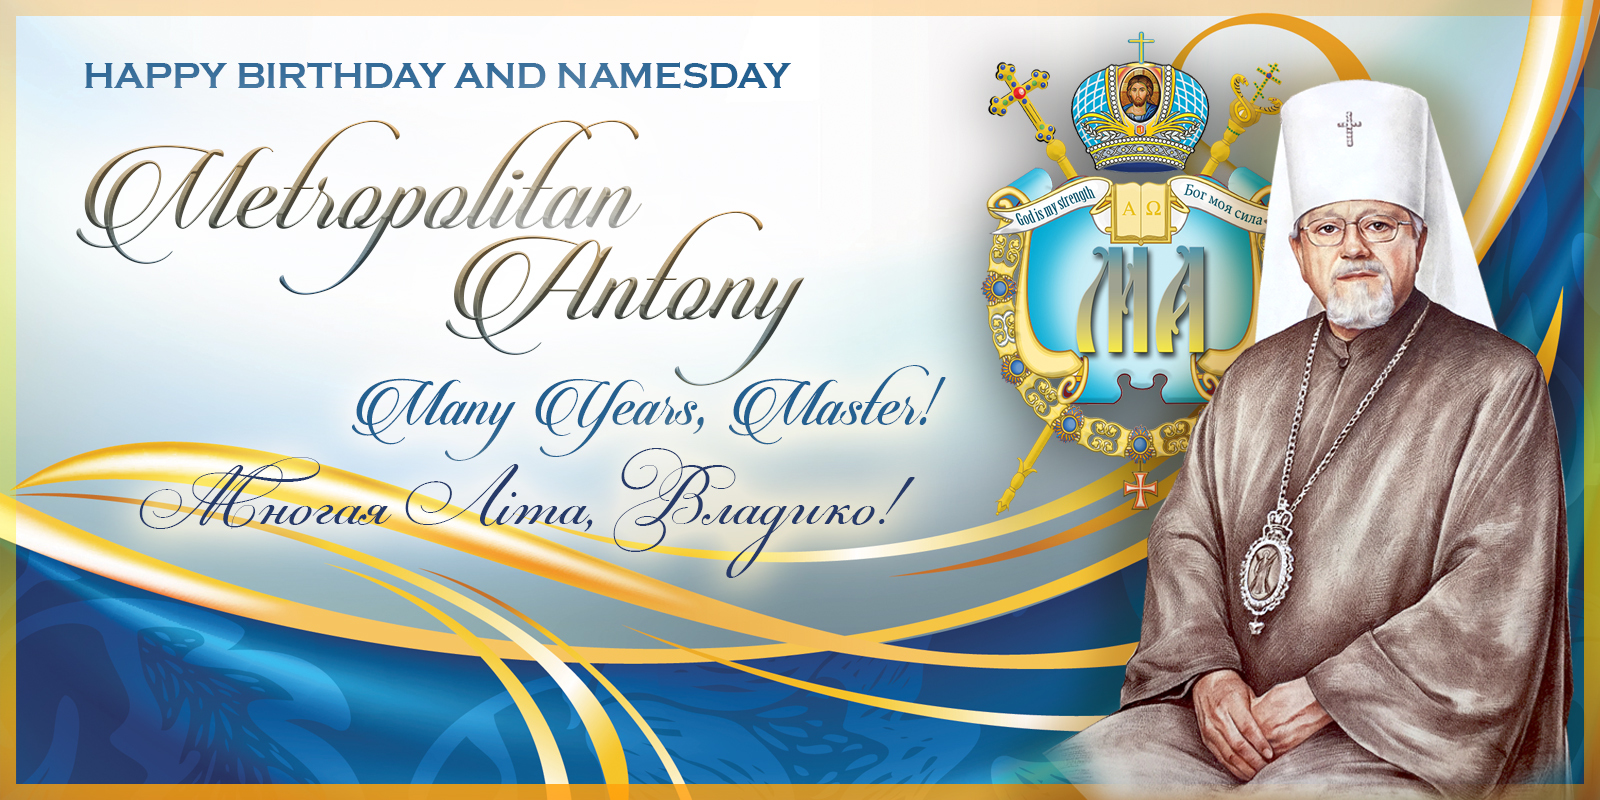 The Church Honors Metropolitan Antony On His Birthday Name Day